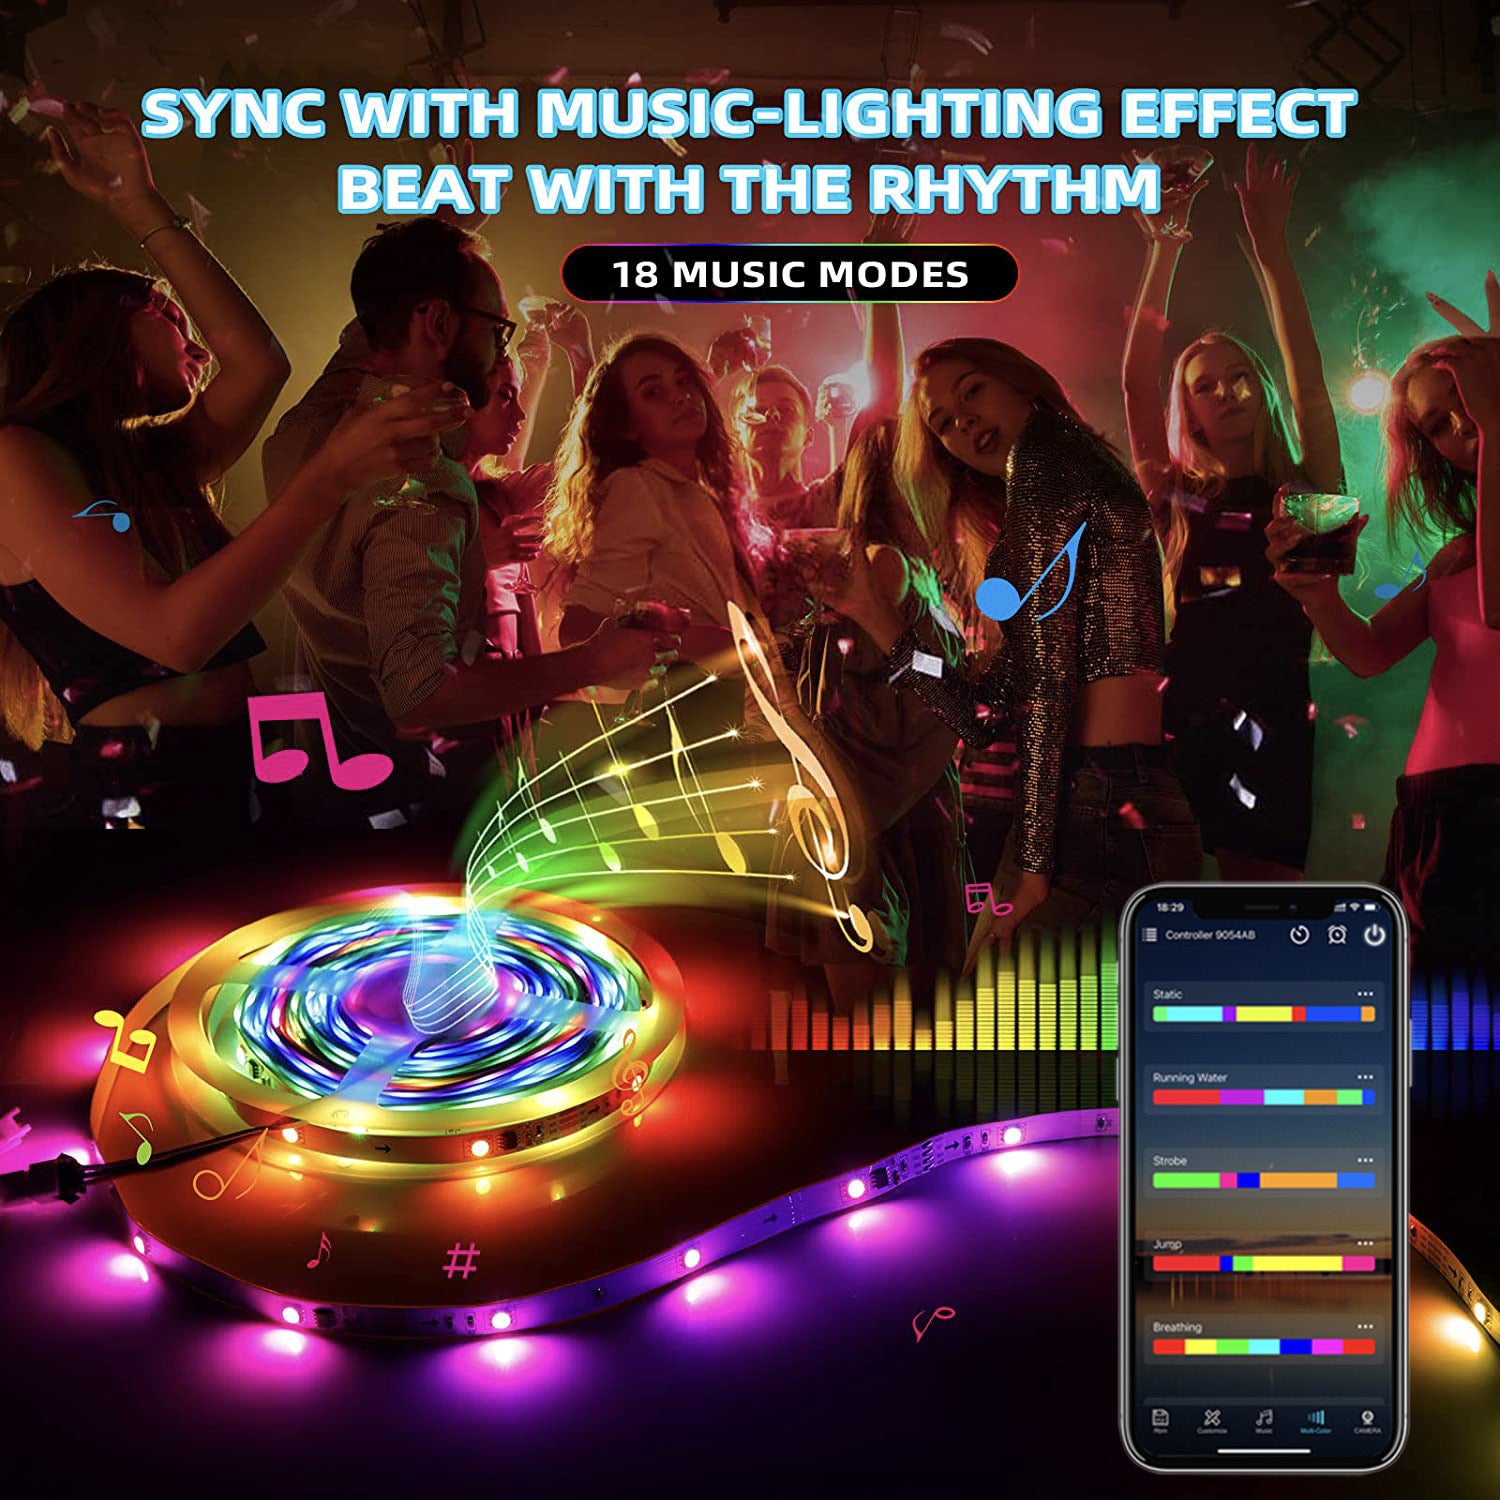 Led Lights for Bedroom 100 ft (2 Rolls of 50ft) Music Sync Color Changing  RGB Led Strip Lights with Remote App Control Bluetooth Led Strip, Led  Lights